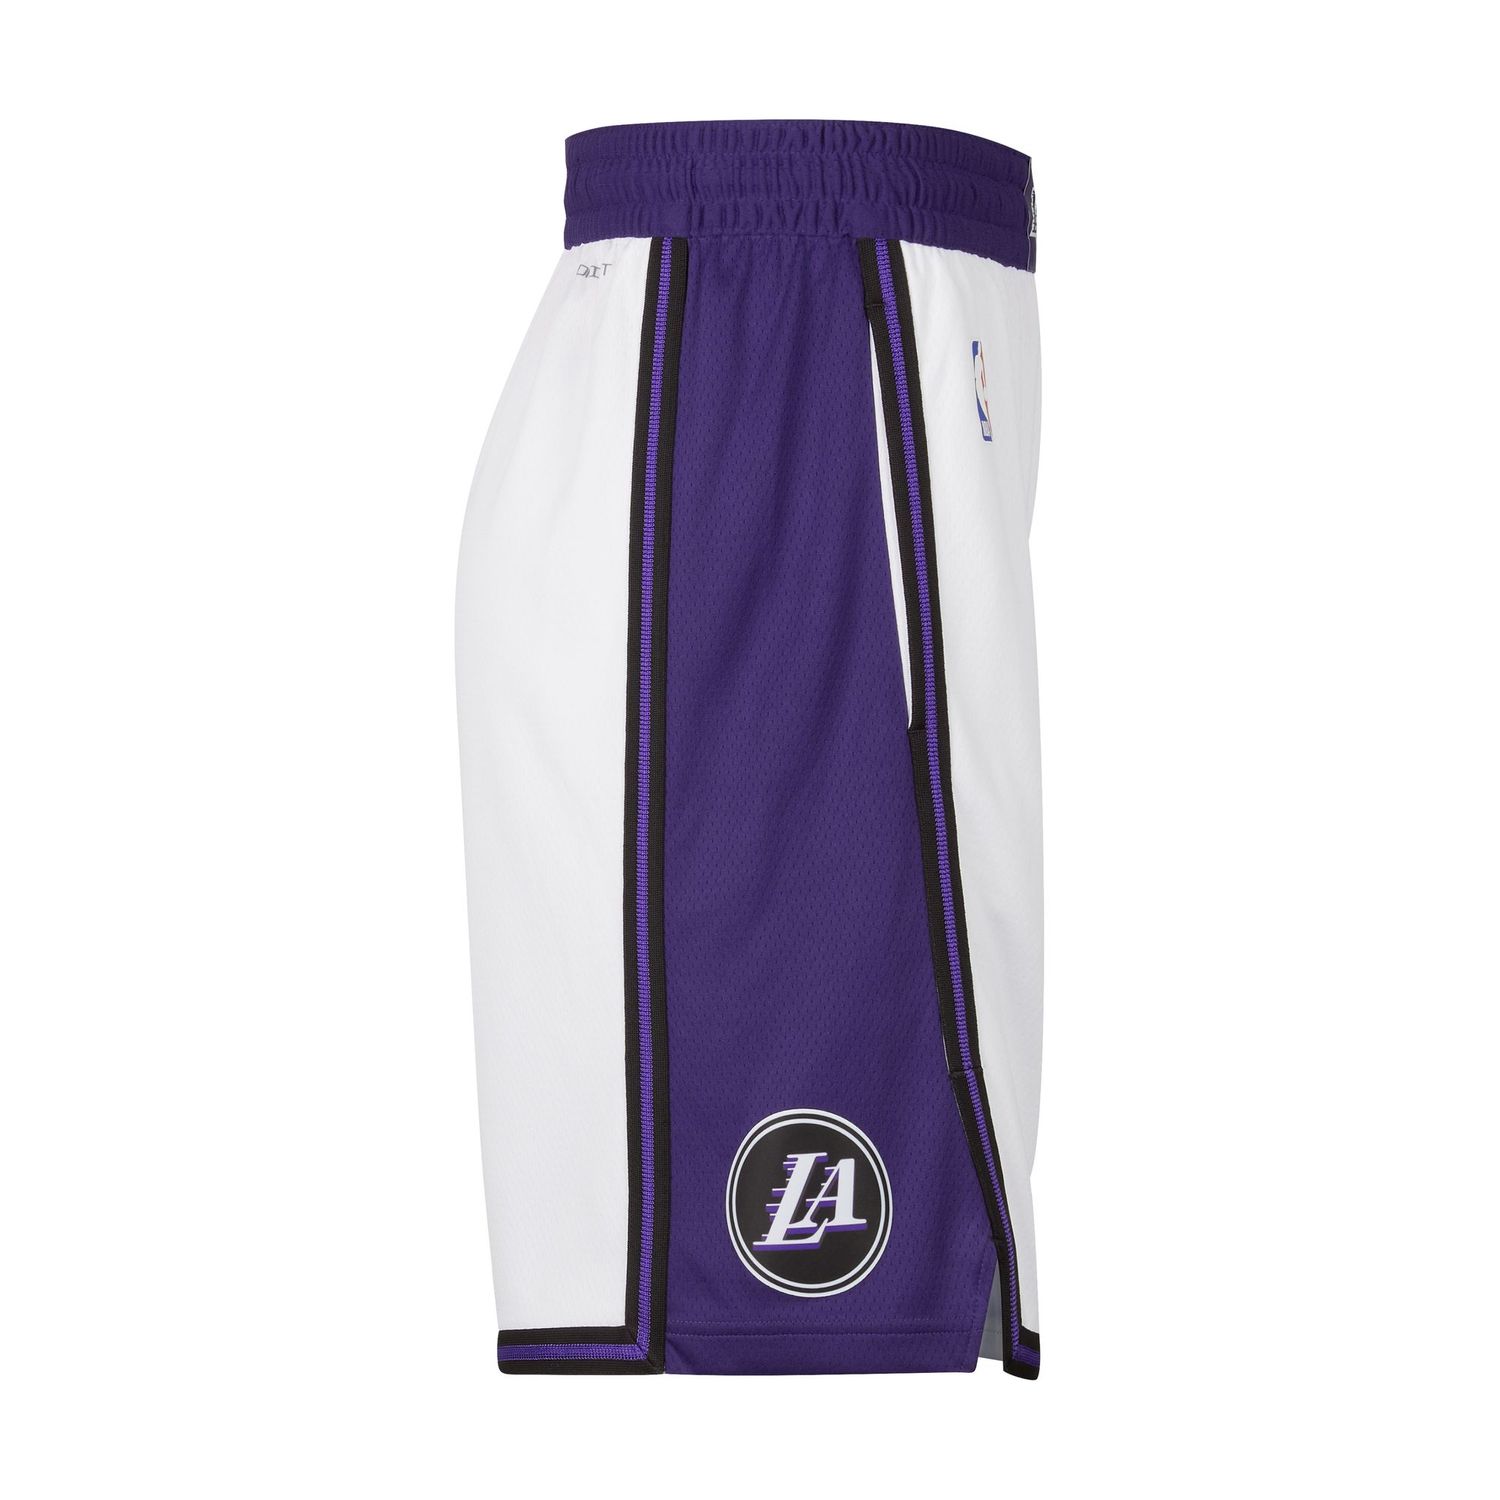 Nike NBA Los Angeles Lakers City Edition Swingman Shorts